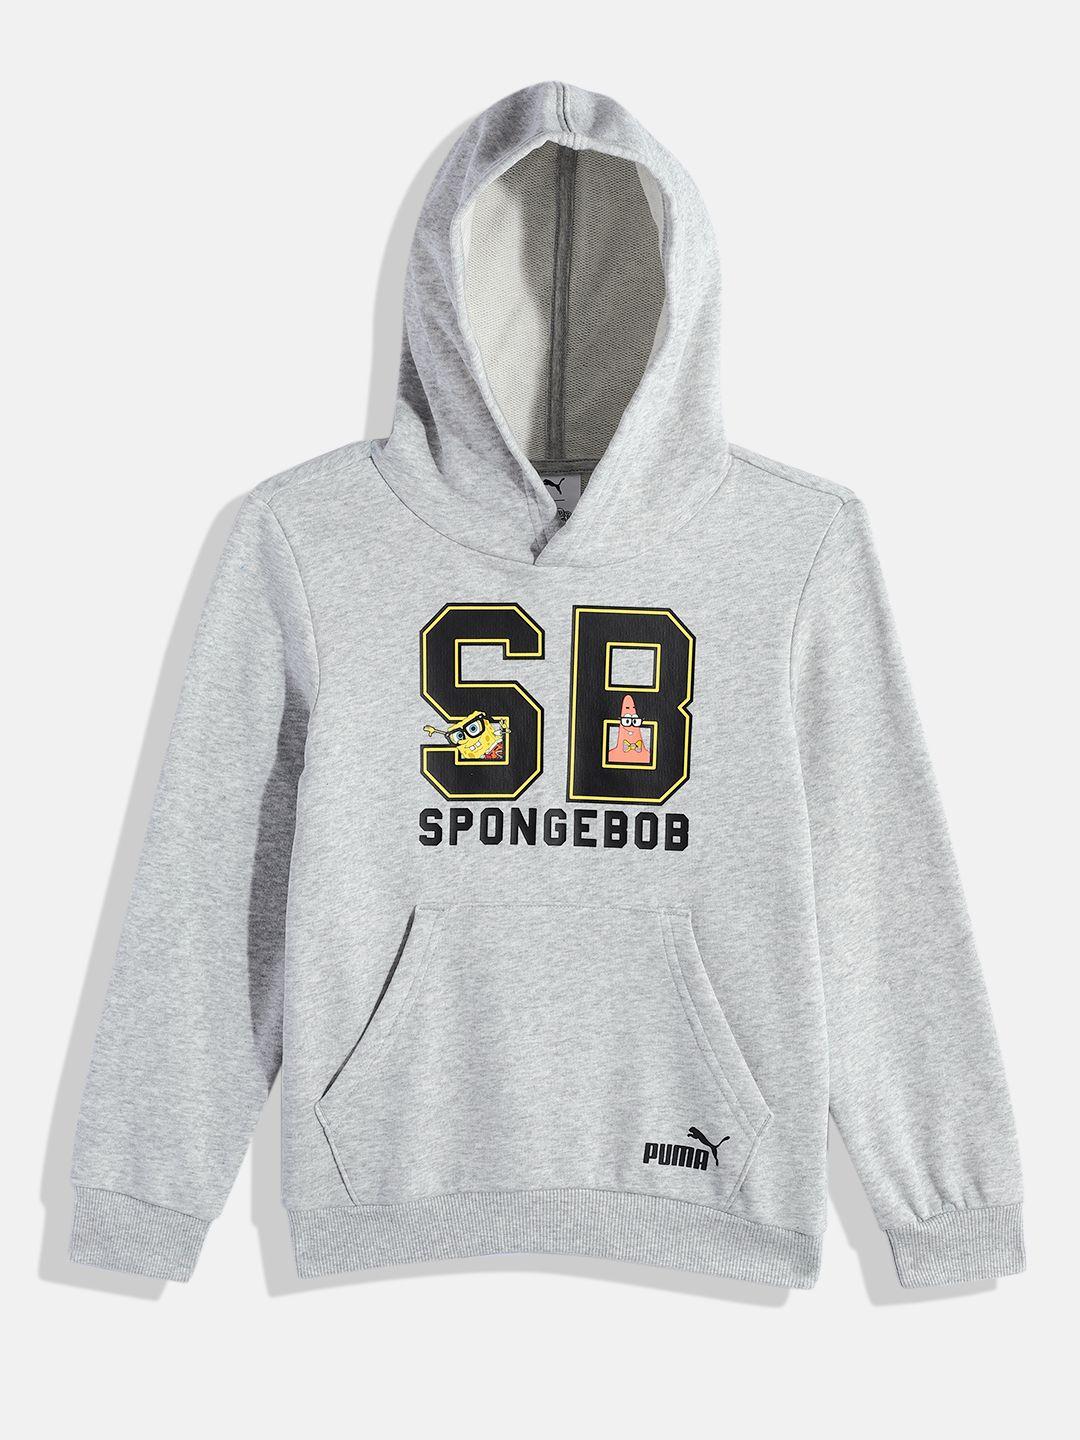 puma unisex kids spongebob squarepants youth printed hooded sweatshirt